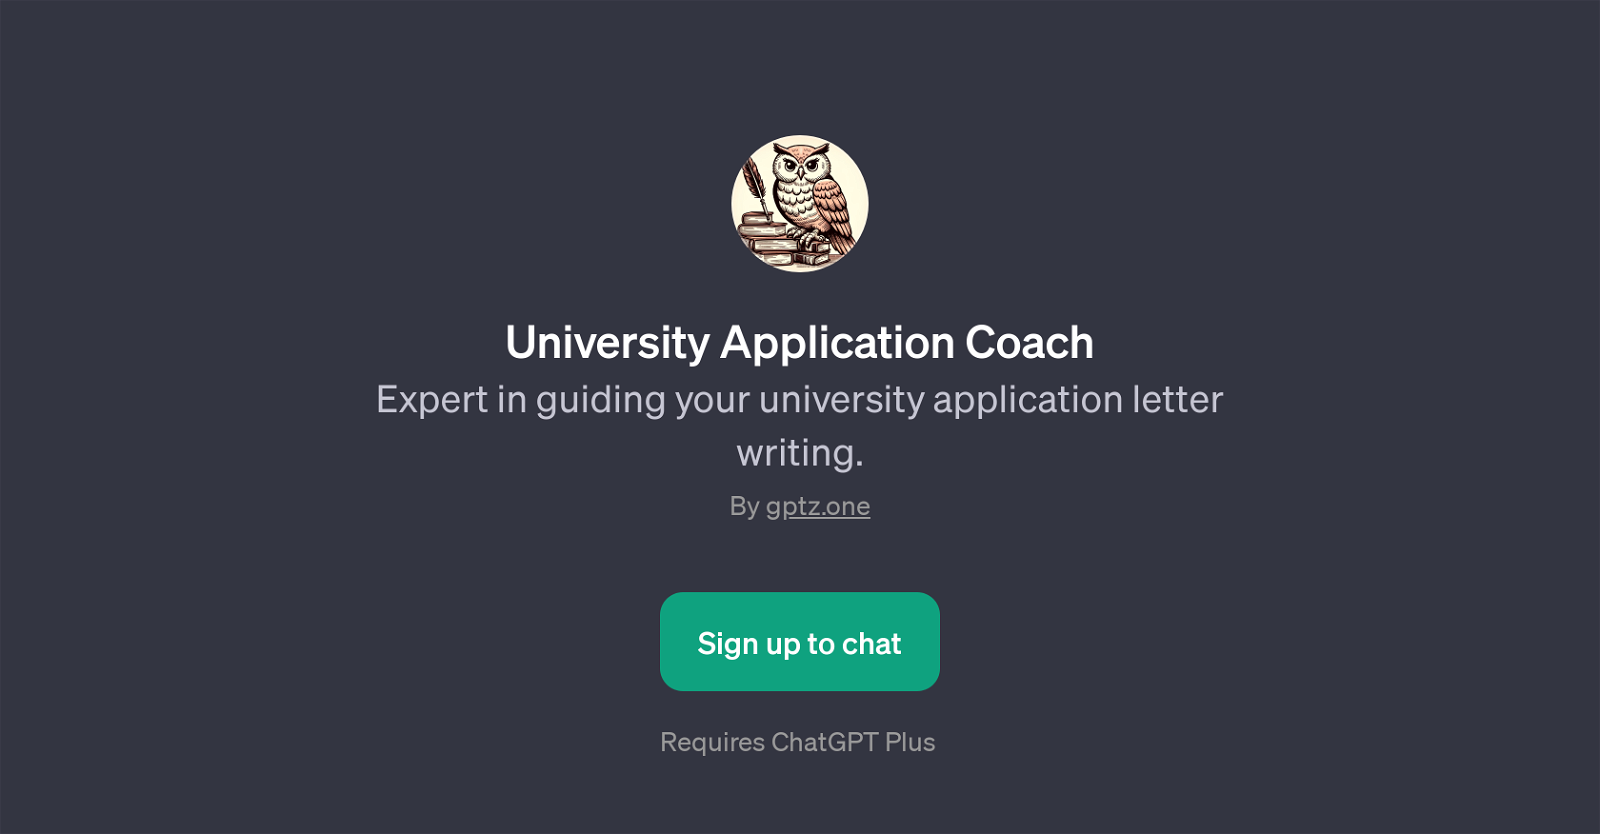 University Application Coach website